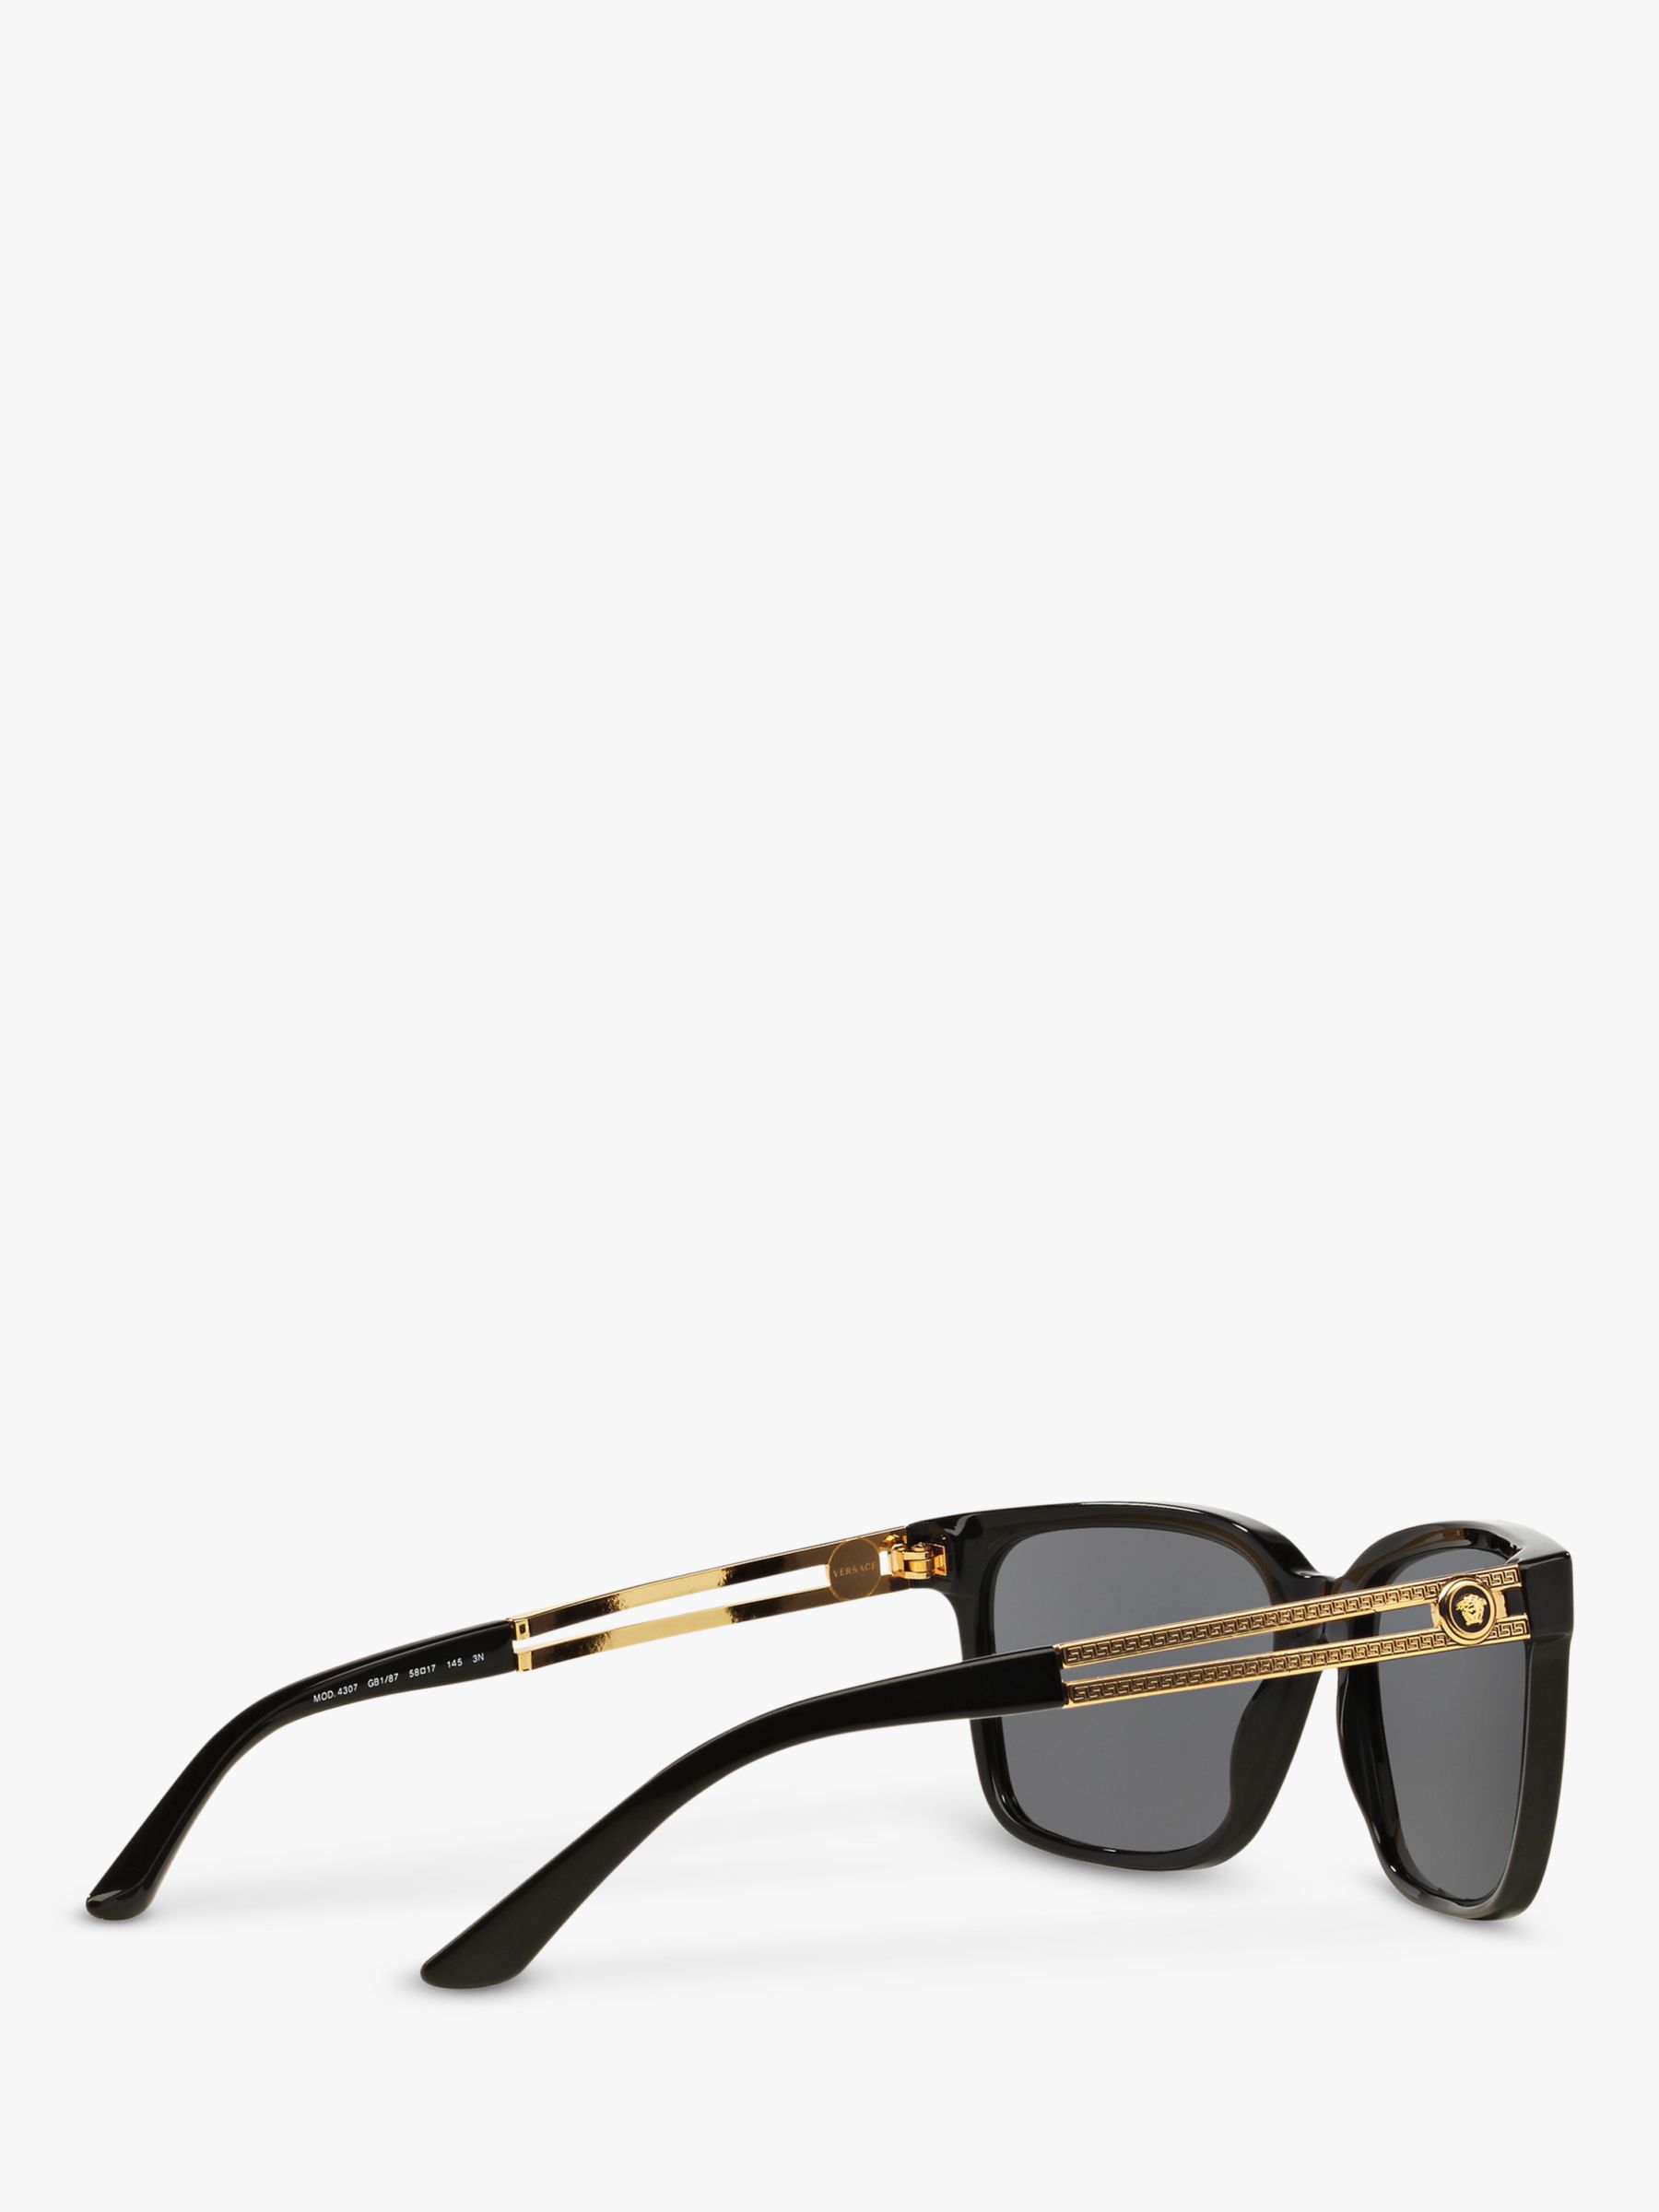 Versace VE4307 Men's Square Sunglasses, Black/Grey at John Lewis & Partners